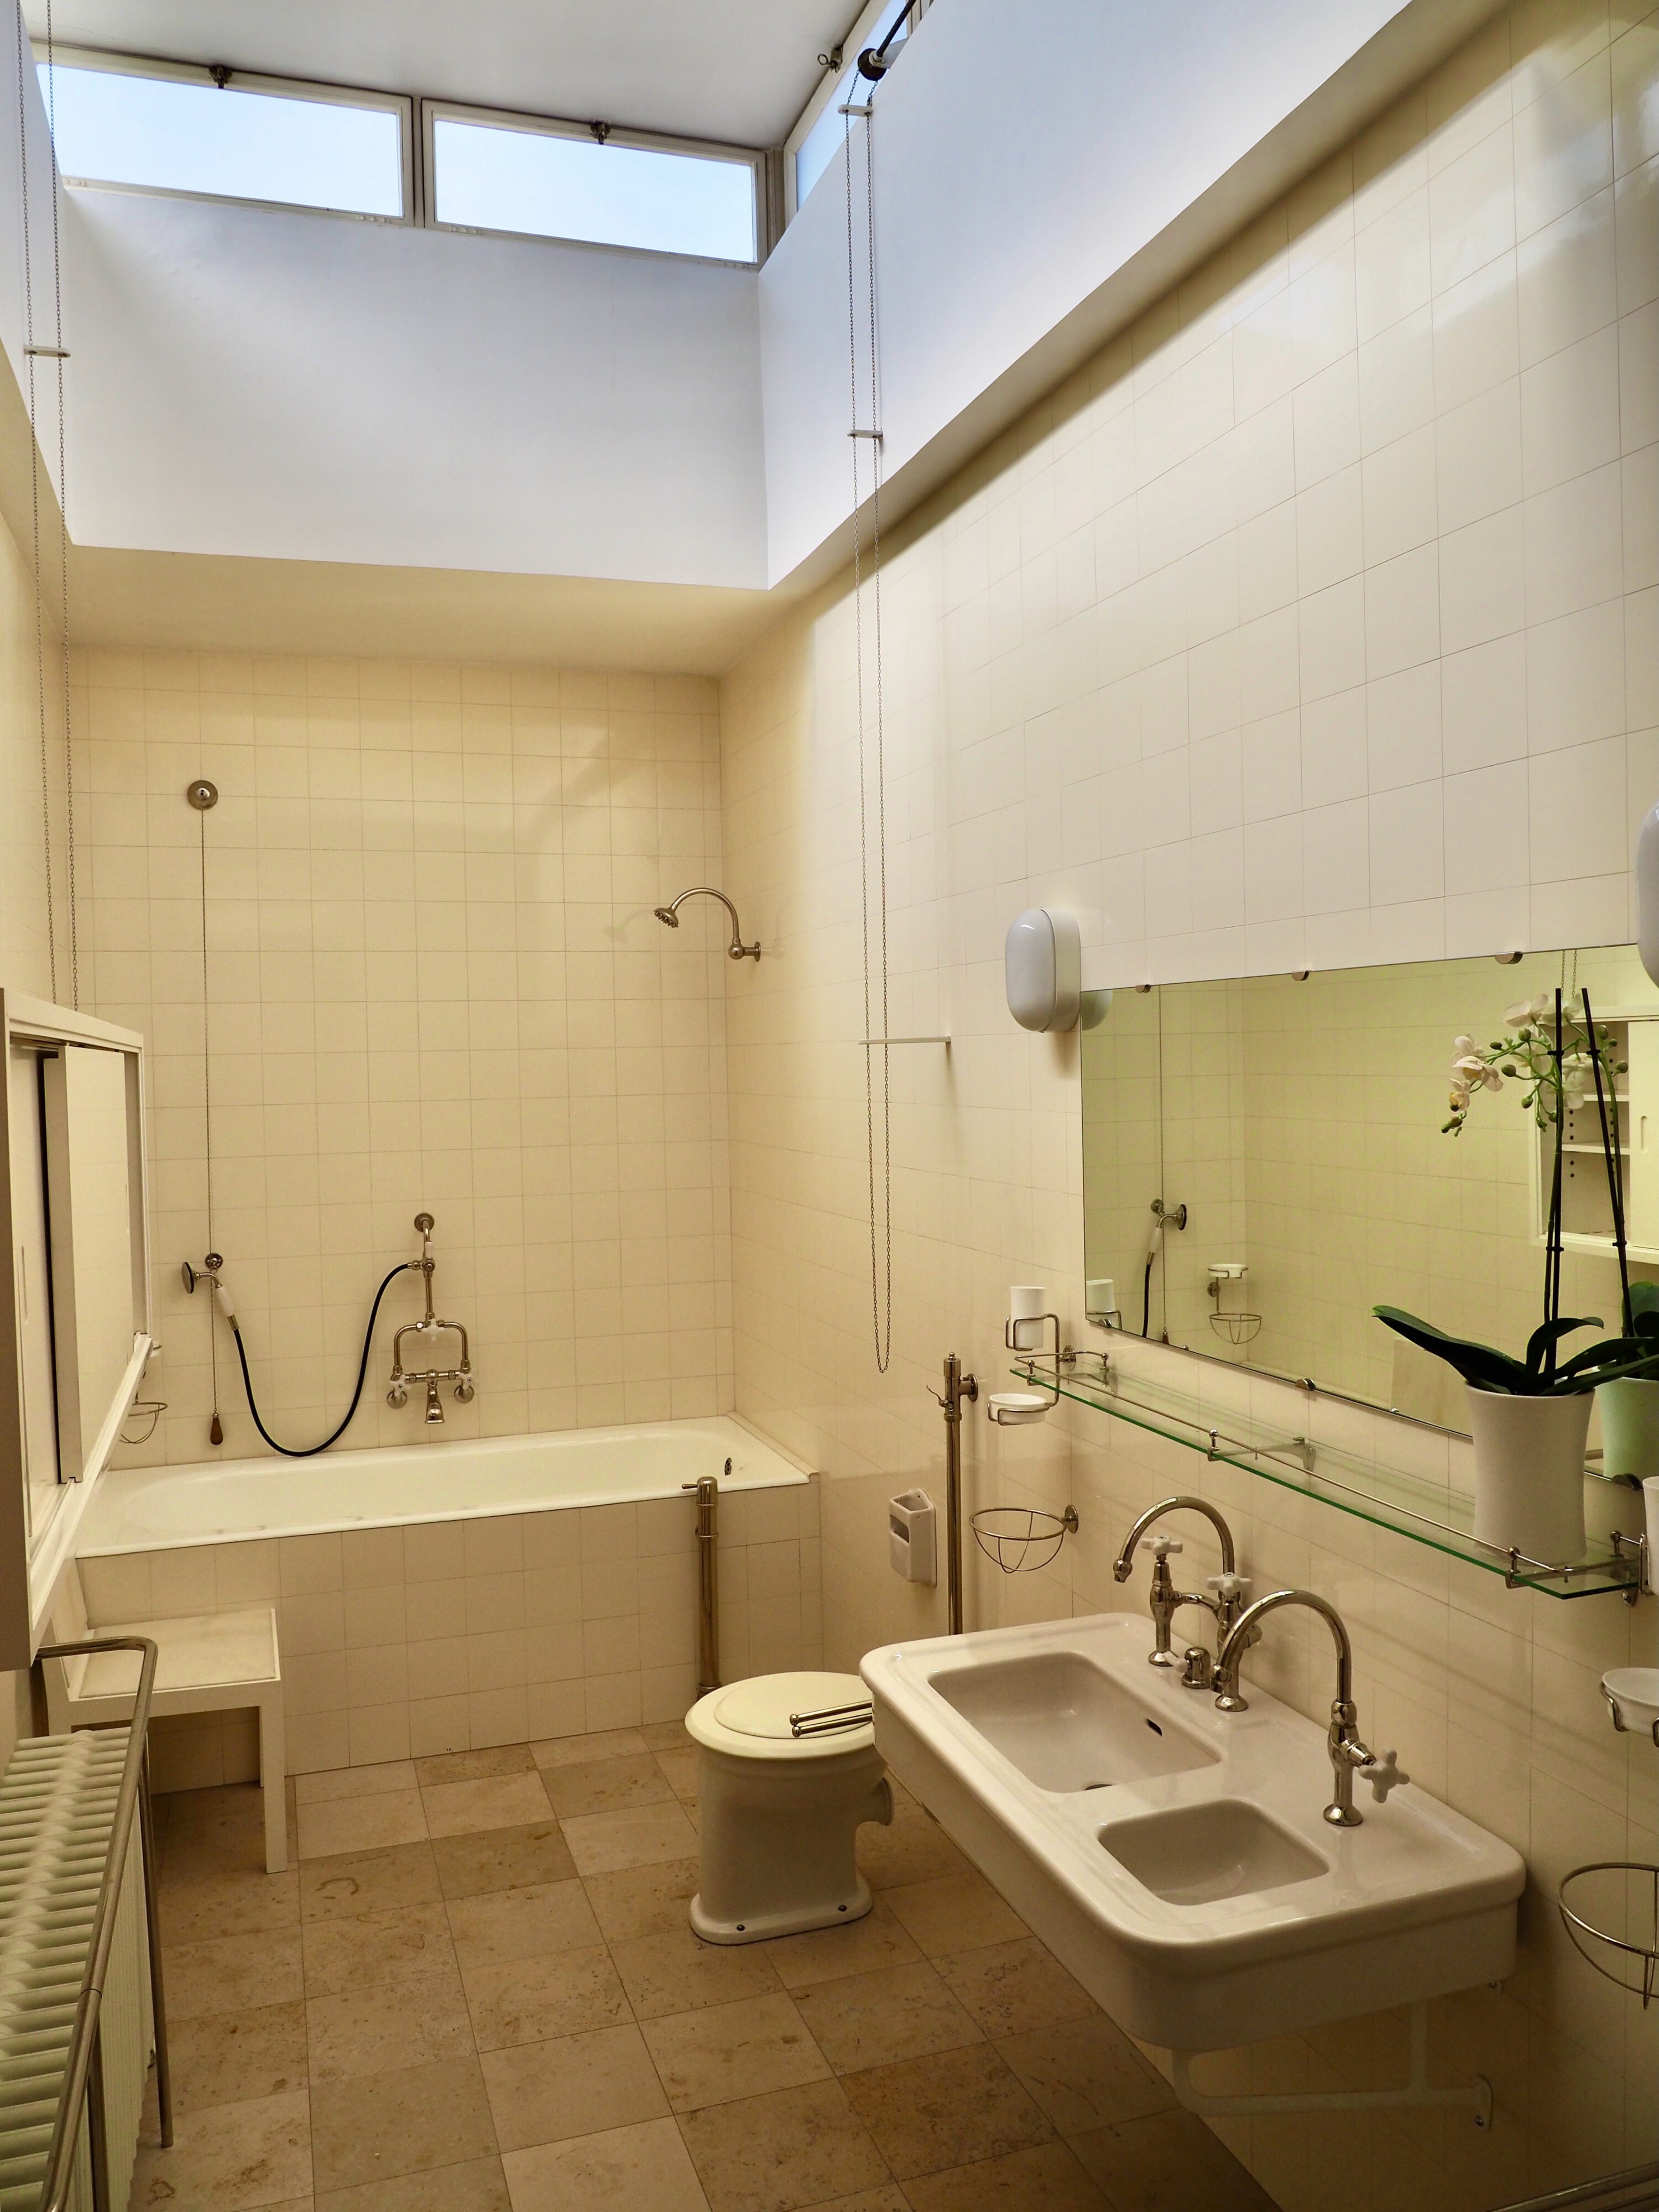 bathroom of villa tugendhat